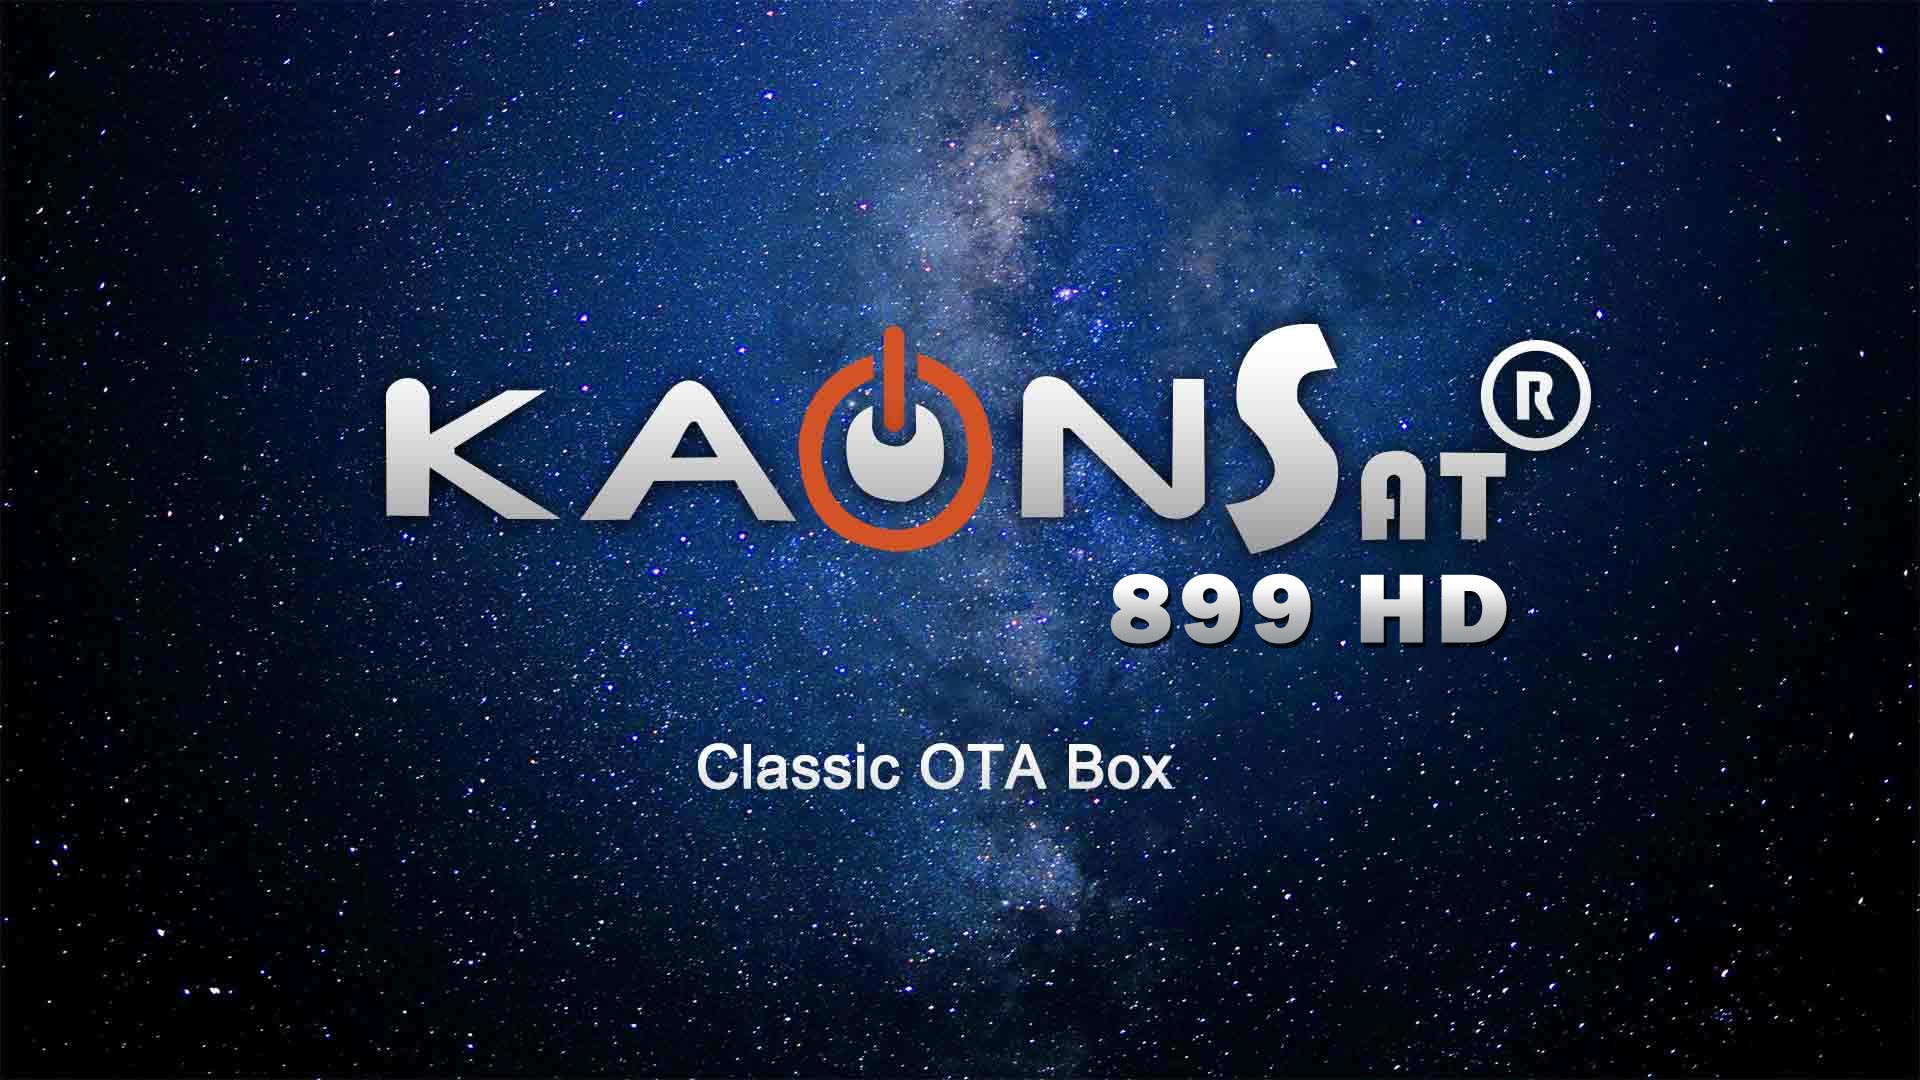 Download Firmware Kaonsat 899 HD Classic K5 SW Software Terbaru